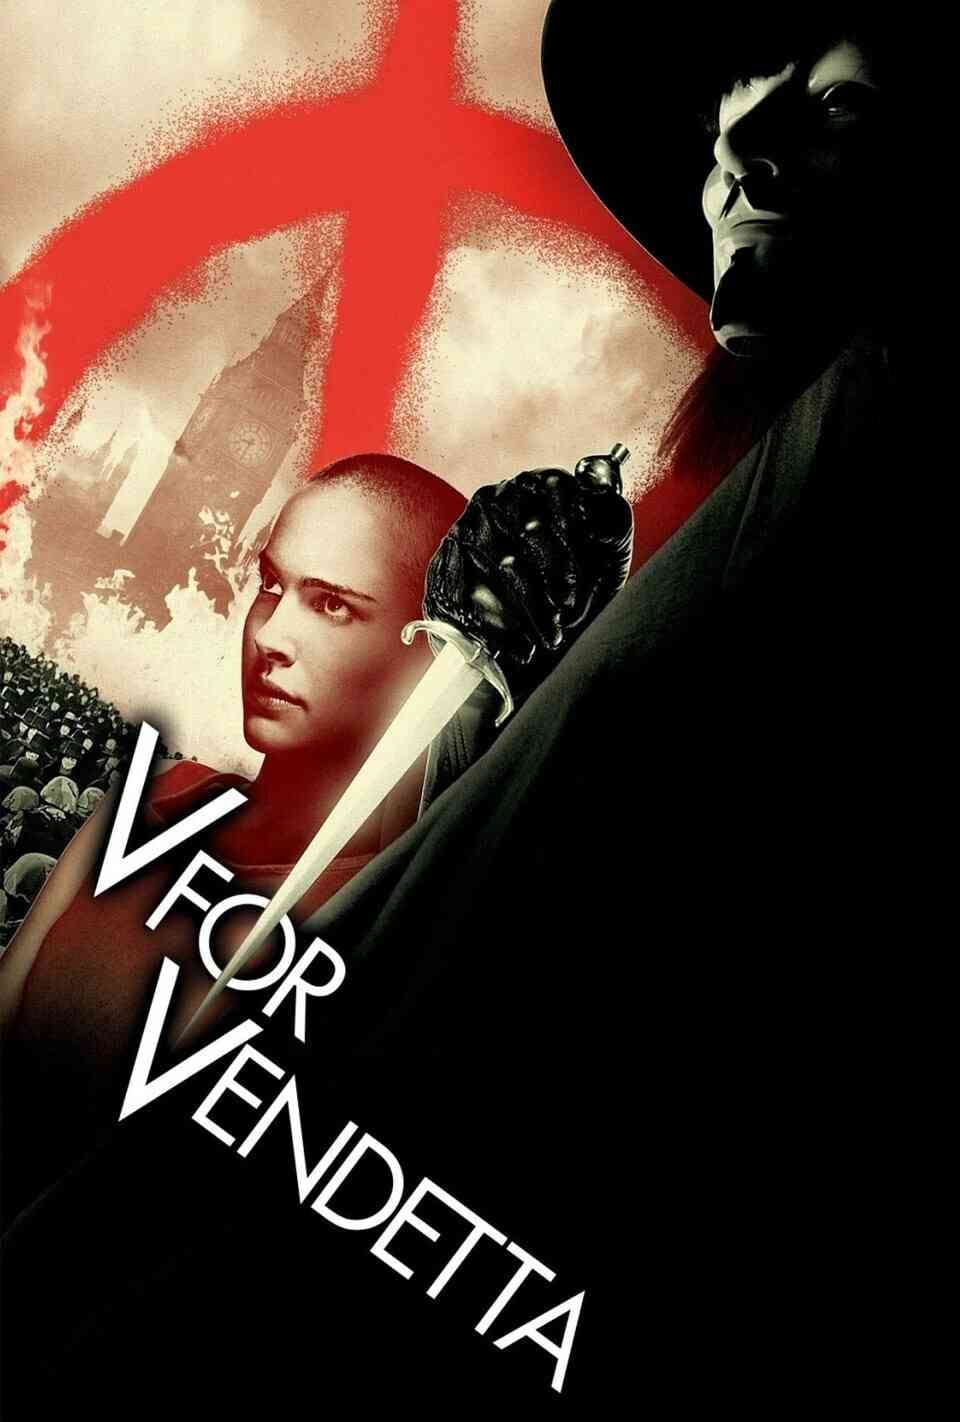 Read V for Vendetta screenplay.